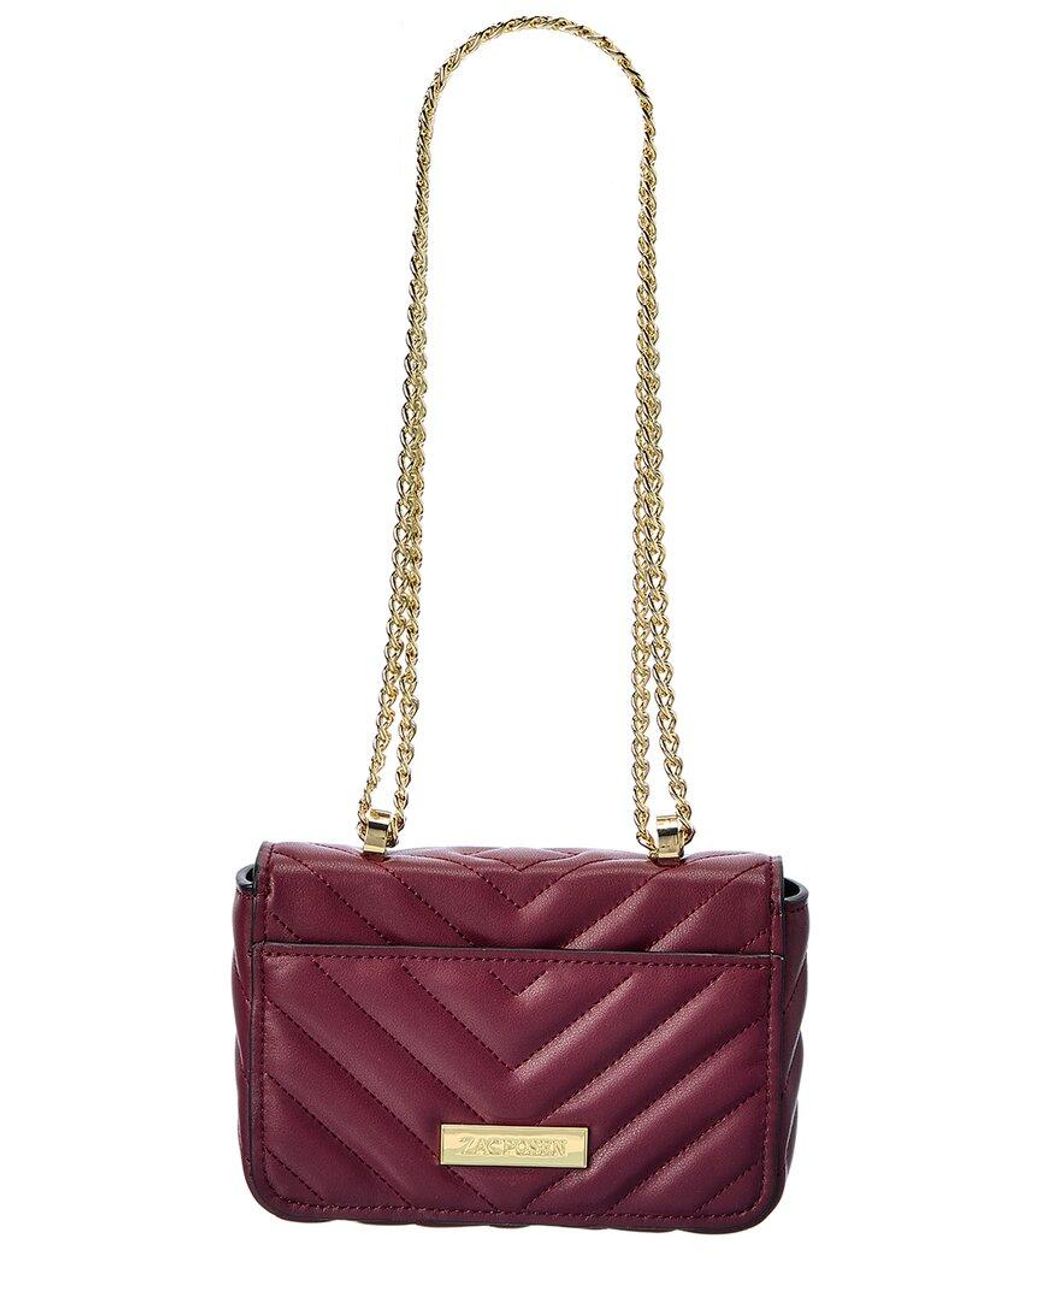 New ZAC Posen Soft Earthette Shoulder Bag brown crossbody pearl handbag